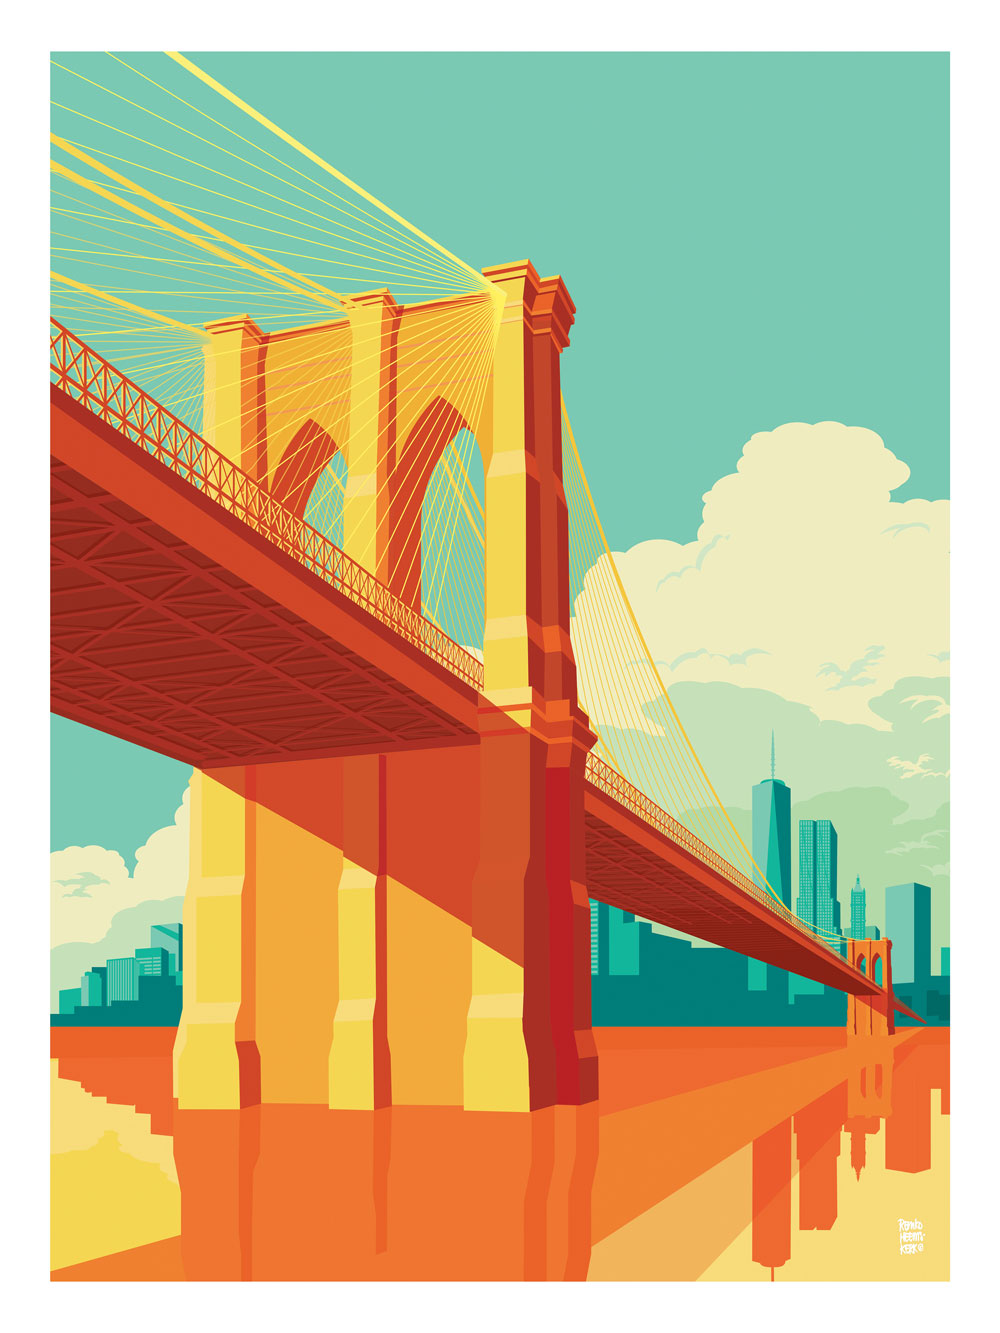 NYC Brooklyn Bridge-print, remko-heemskerk-Print-30 x 40 cm-BLUE SHAKER